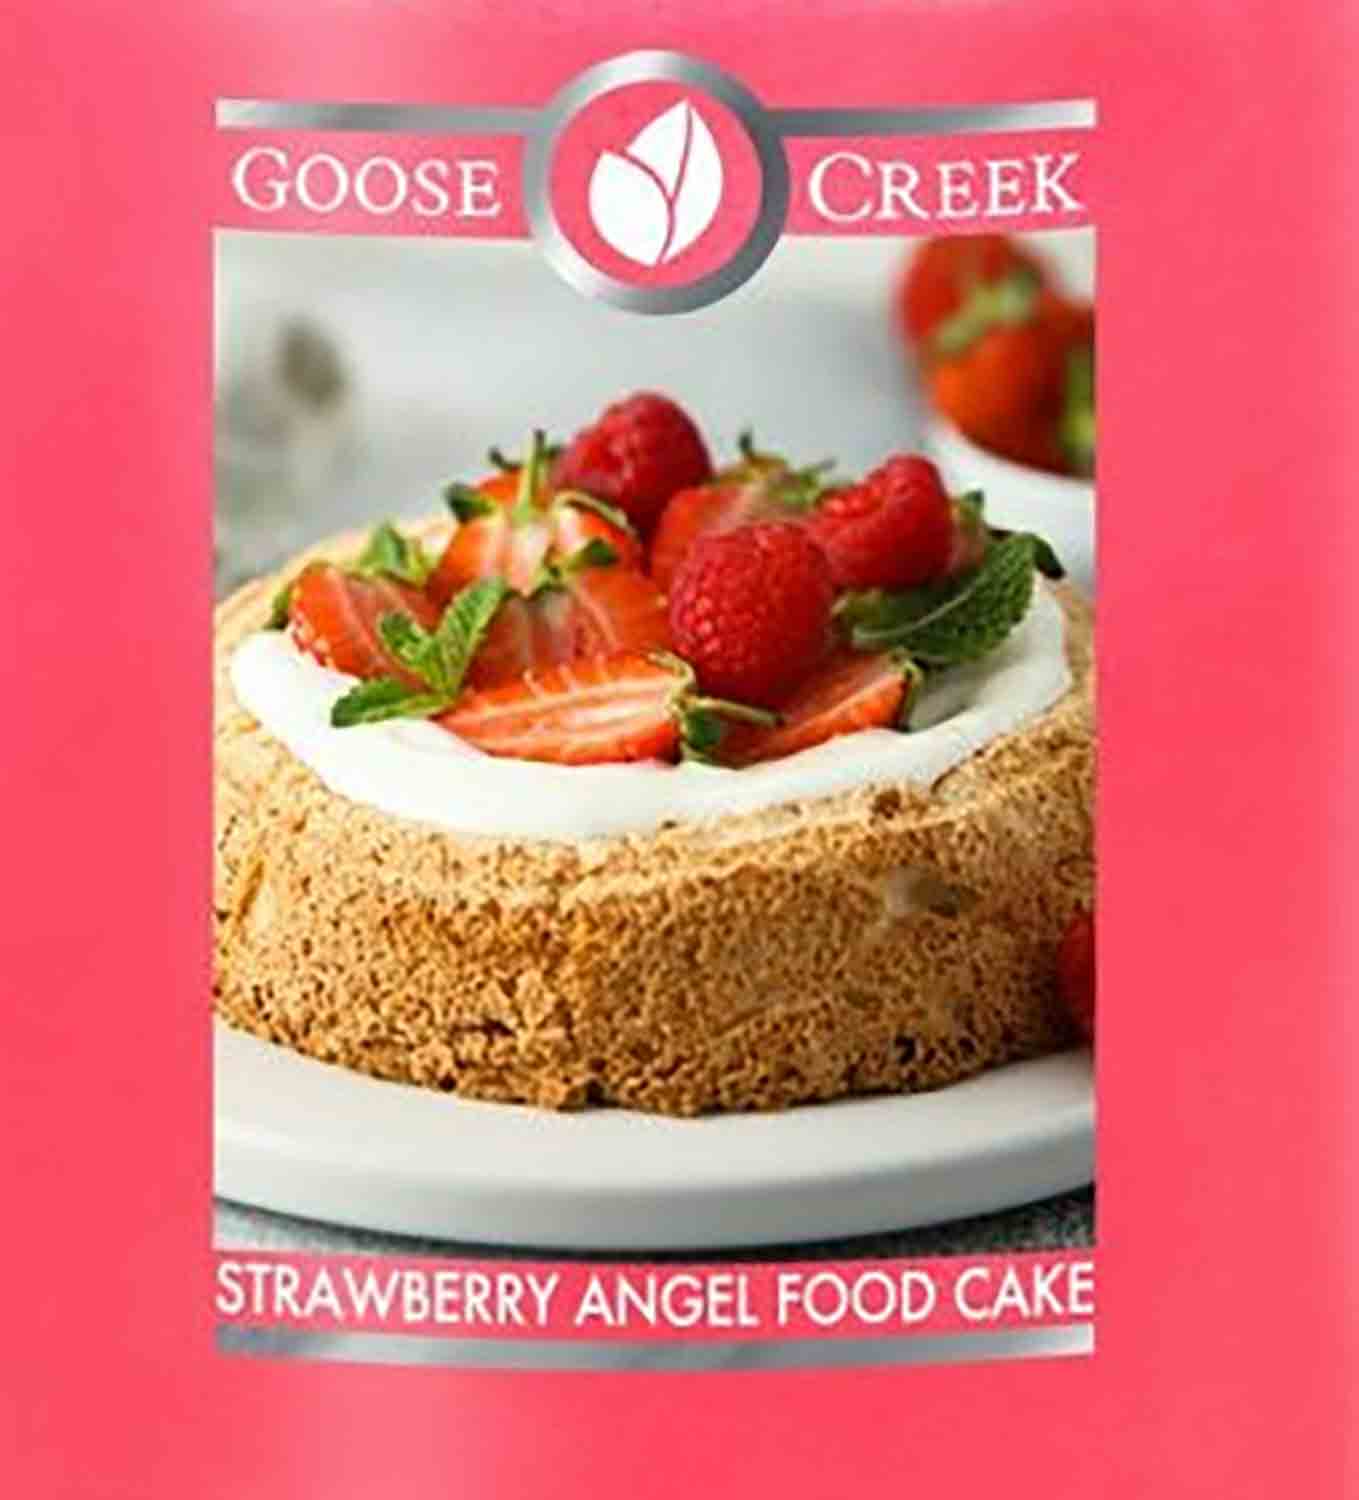 Goose Creek Strawberry Angel Food Cake 22 g - Crumble vosk